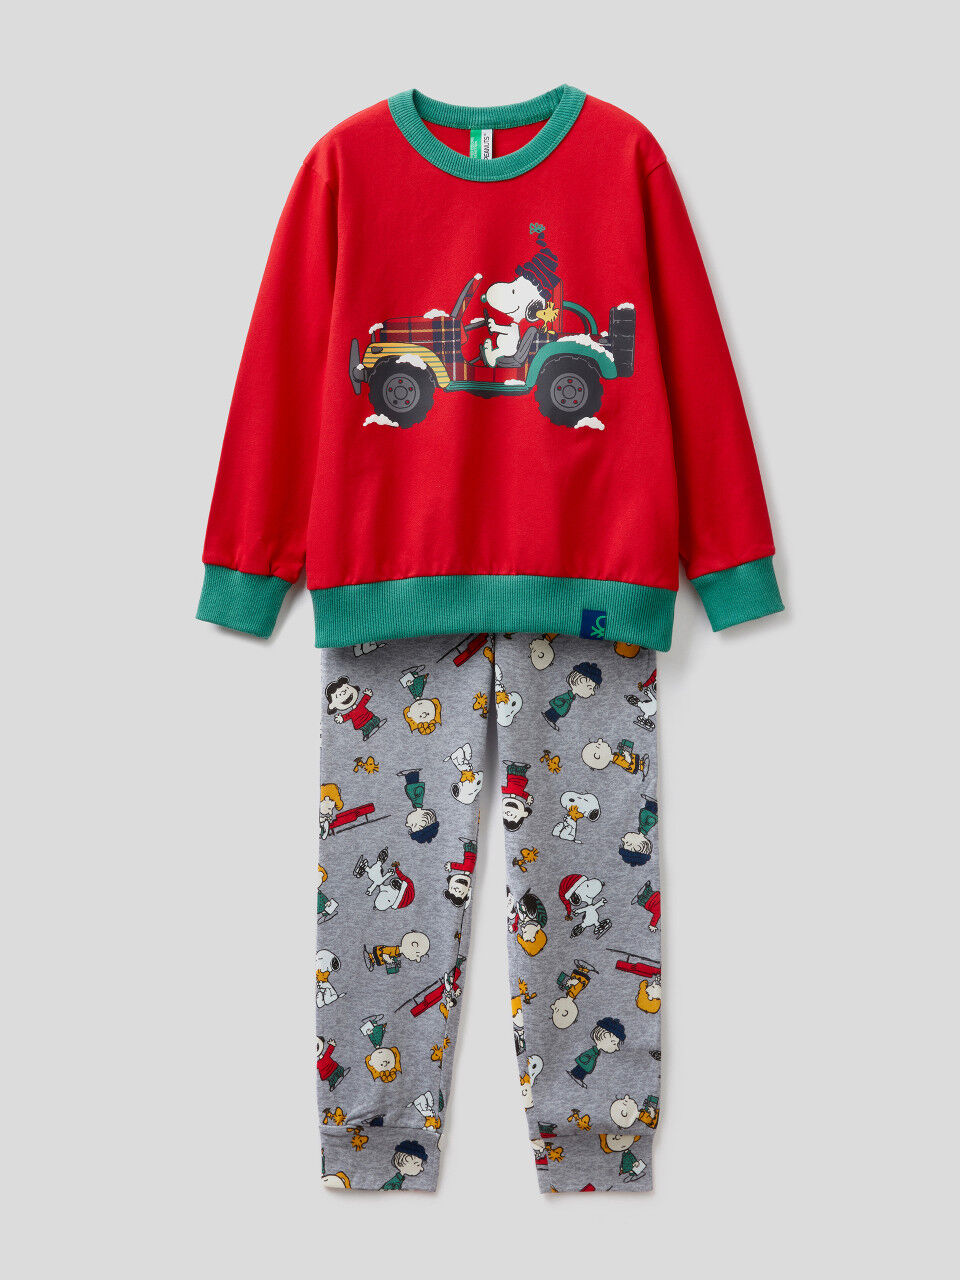 Snoopy-Pyjama aus warmer Baumwolle